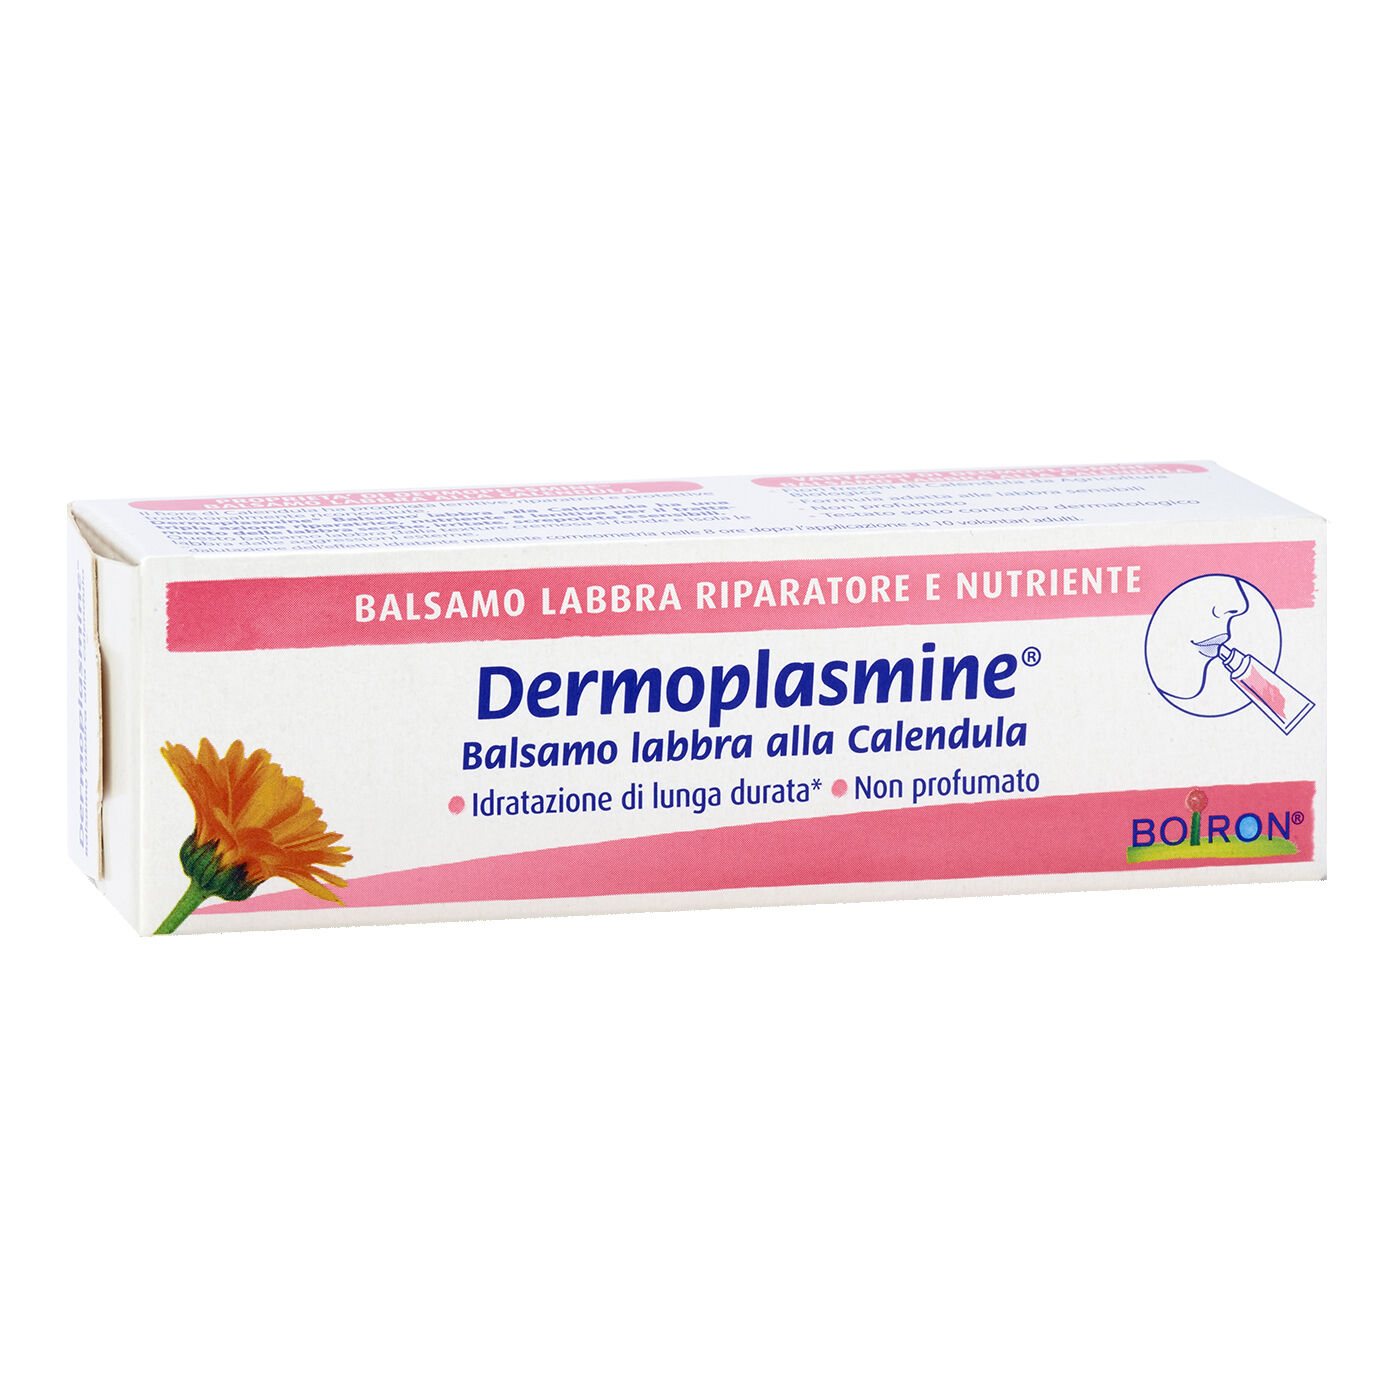 BOIRON Dermoplasmine balsamo labbra riparatore e nutriente 10 g